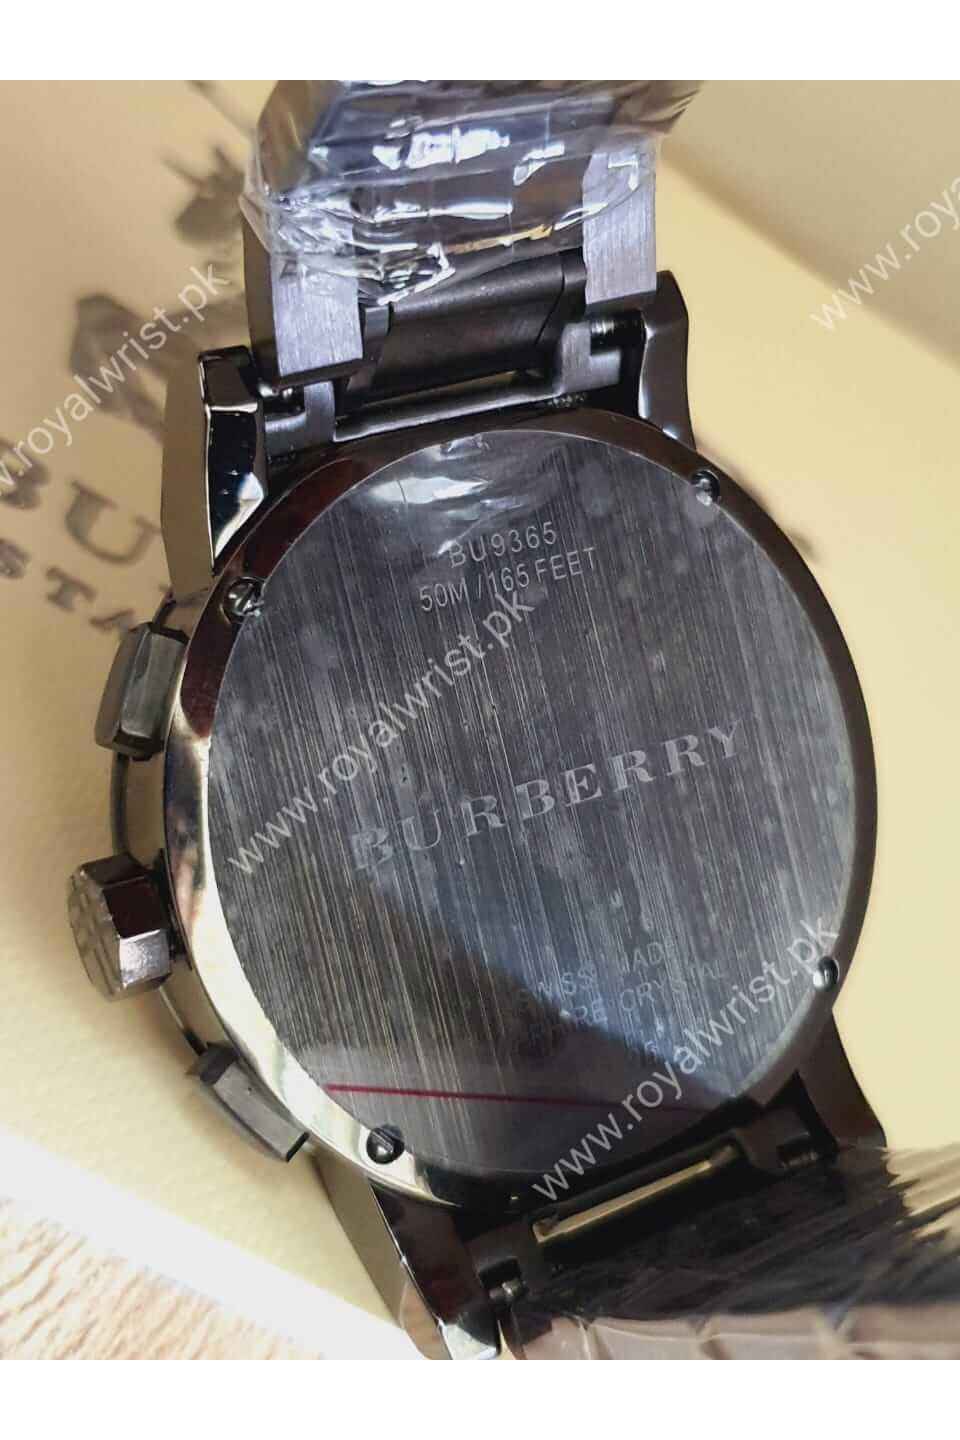 Buy Burberry Men's Swiss Made Stainless Steel Blue Dial 42mm Watch BU9365 in Pakistan